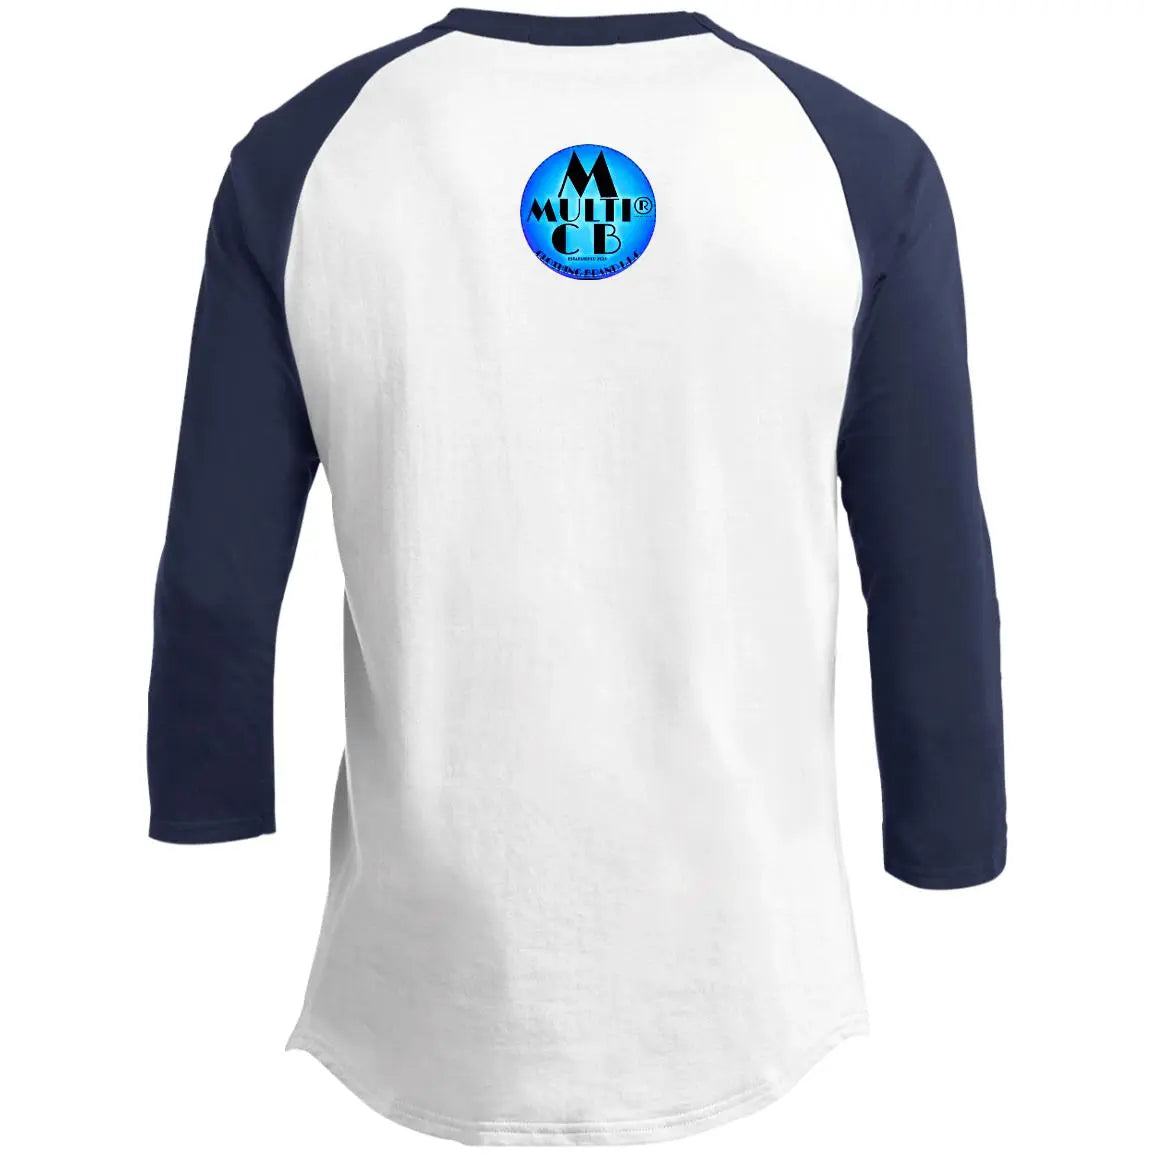 Find The Balance In Your Life - Men's 3/4 Raglan Sleeve Shirt CustomCat